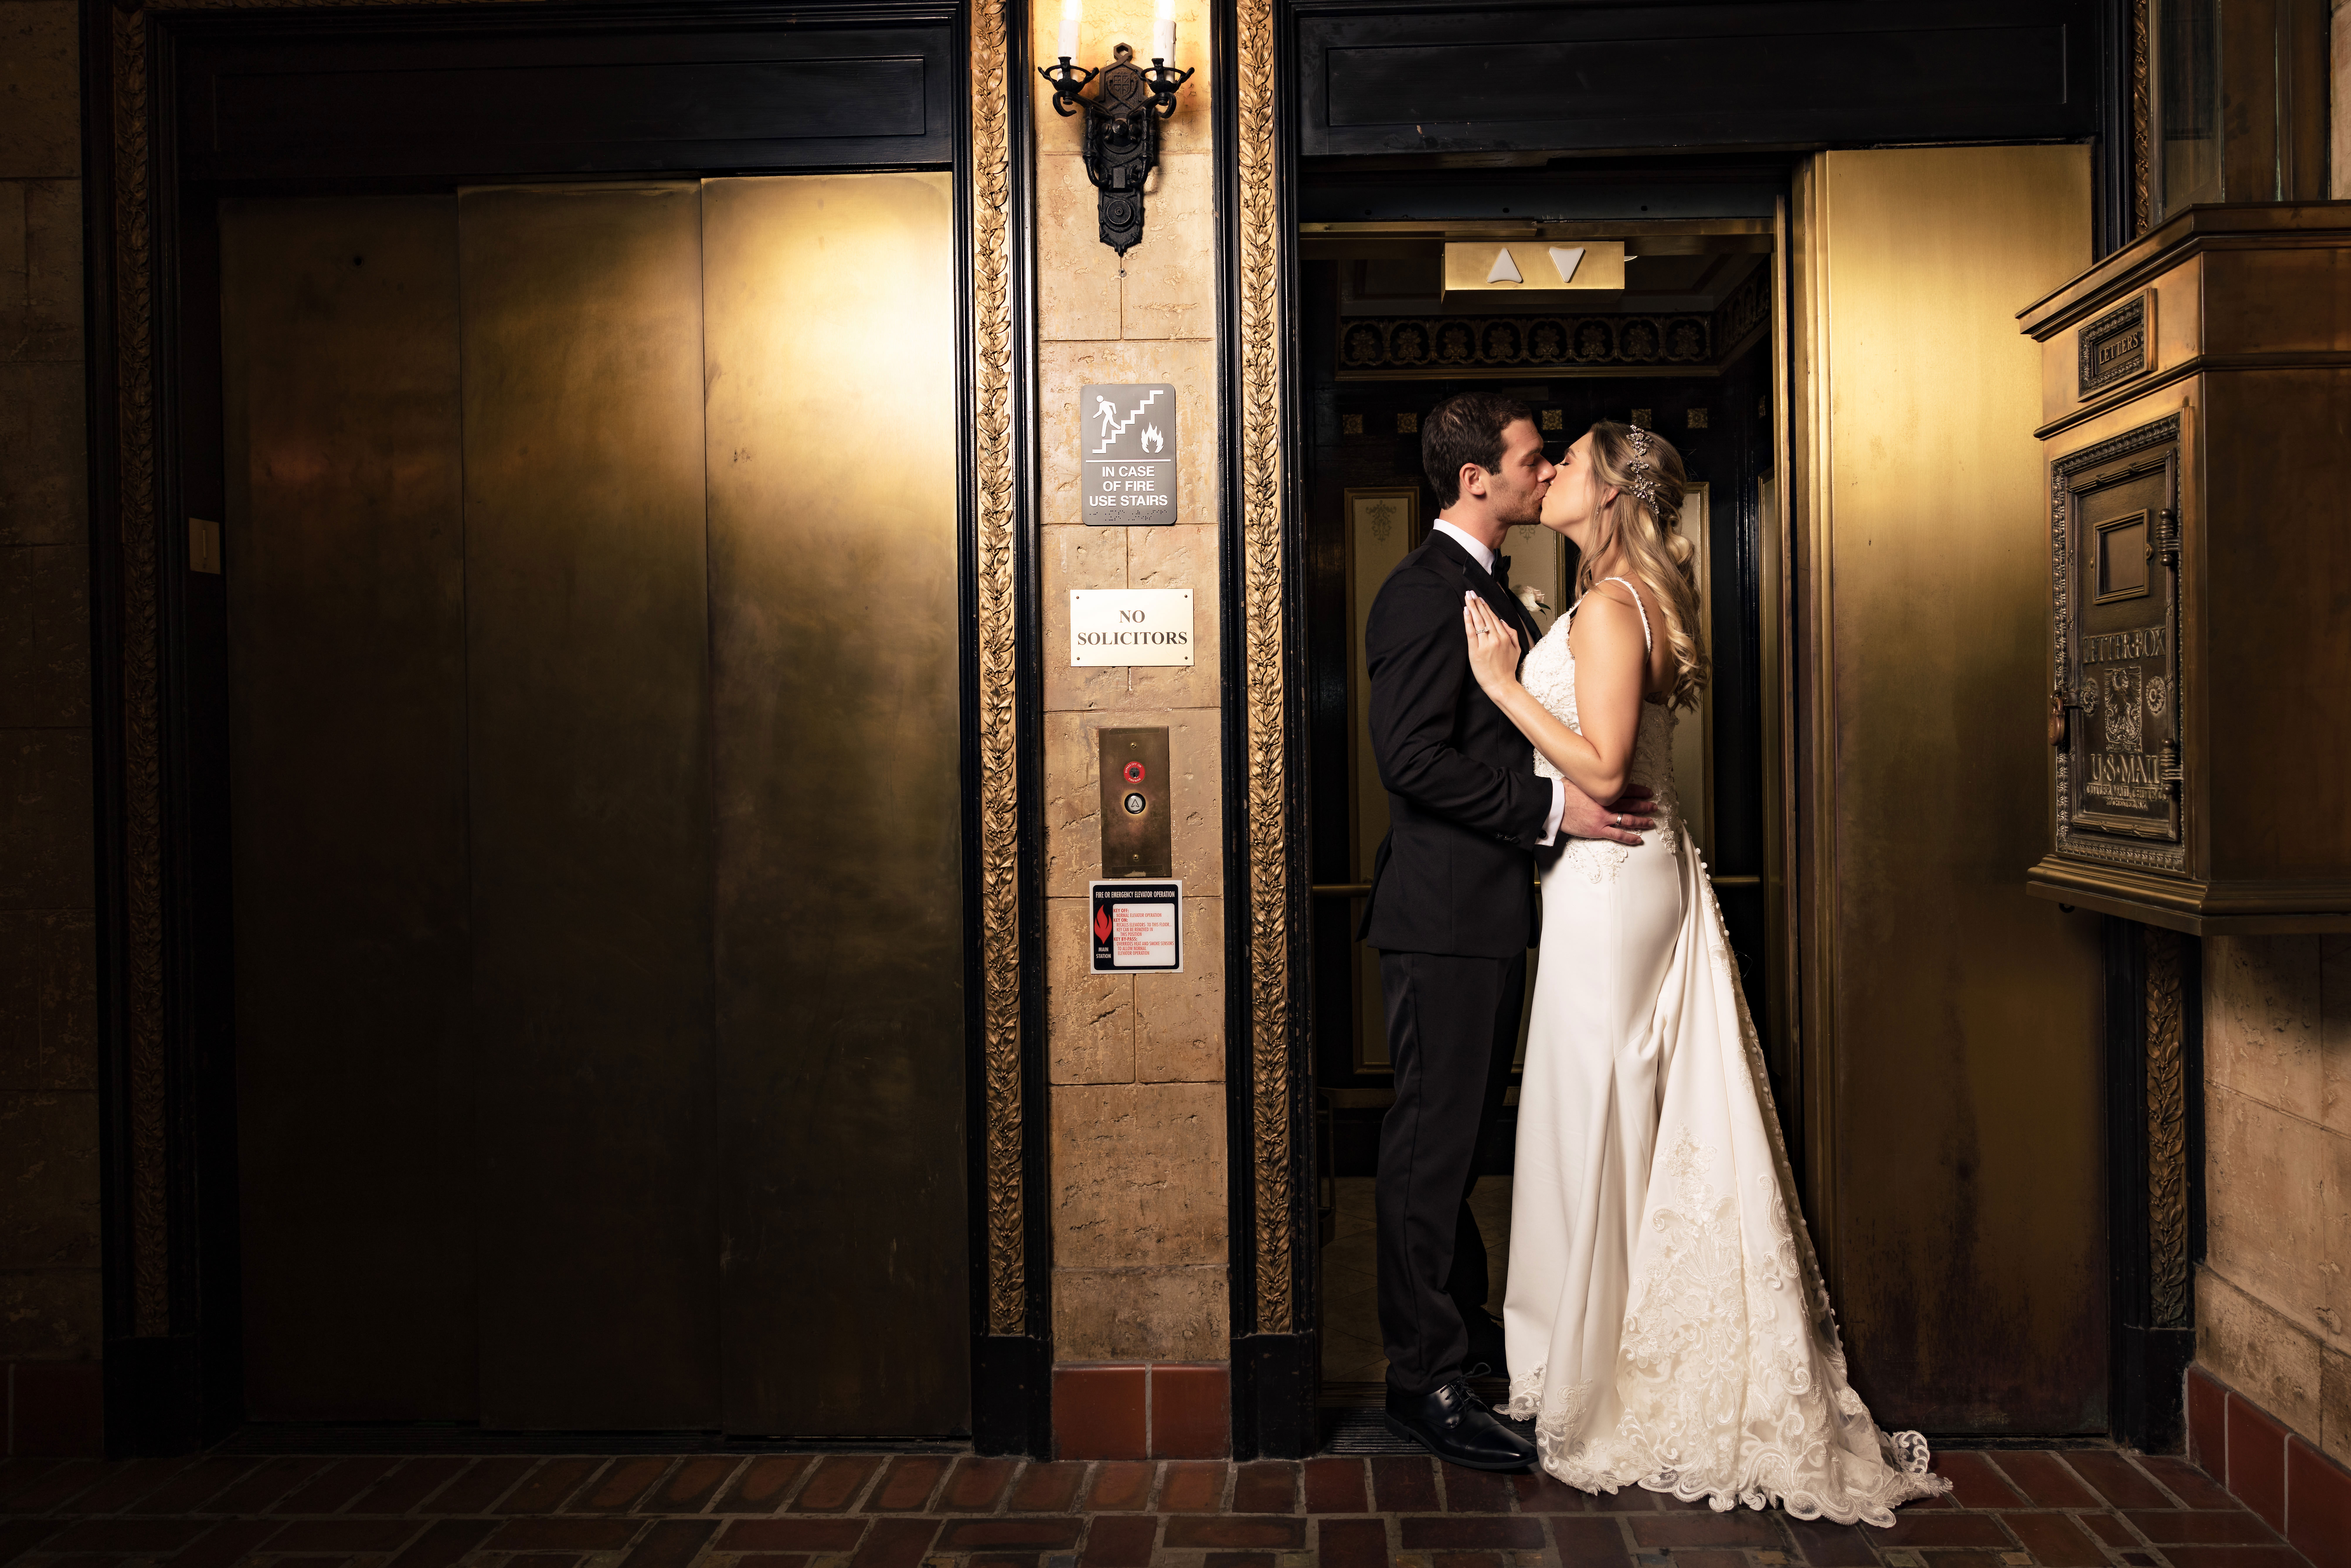 Treasury on the Plaza Wedding elevator